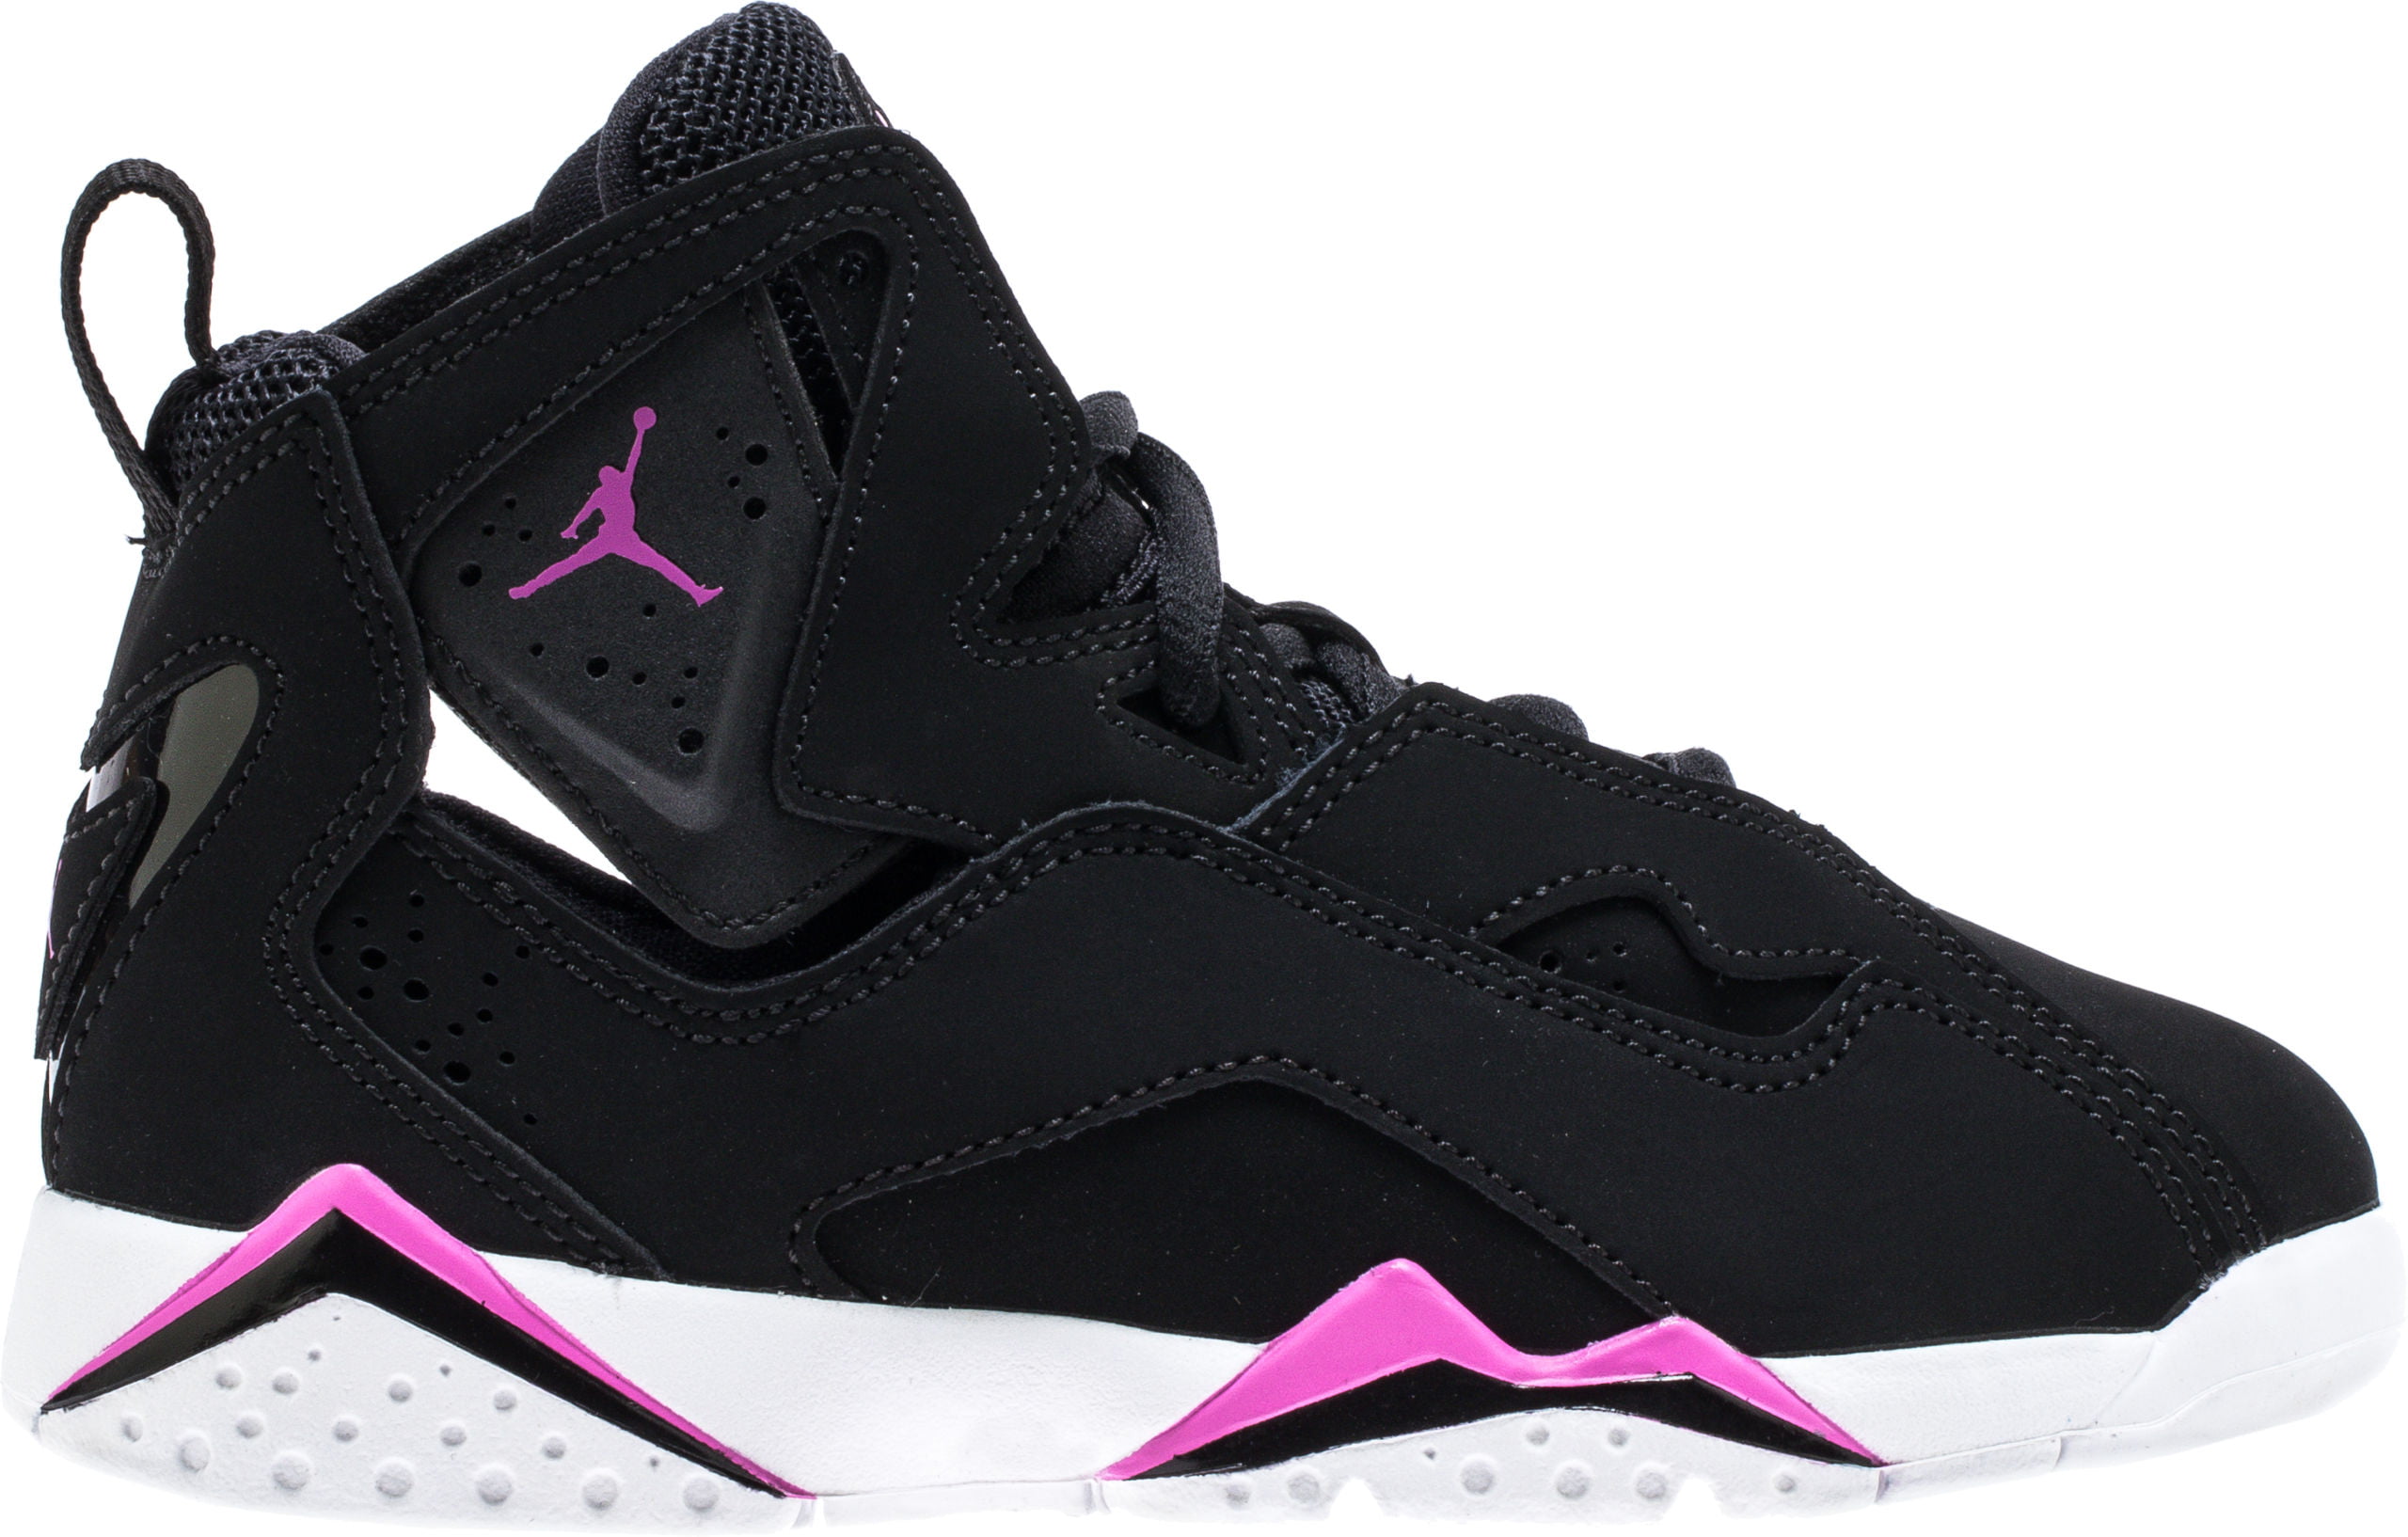 NIKE 342775001 Girl's Jordan True Flight (PS) Basketball Shoe Black